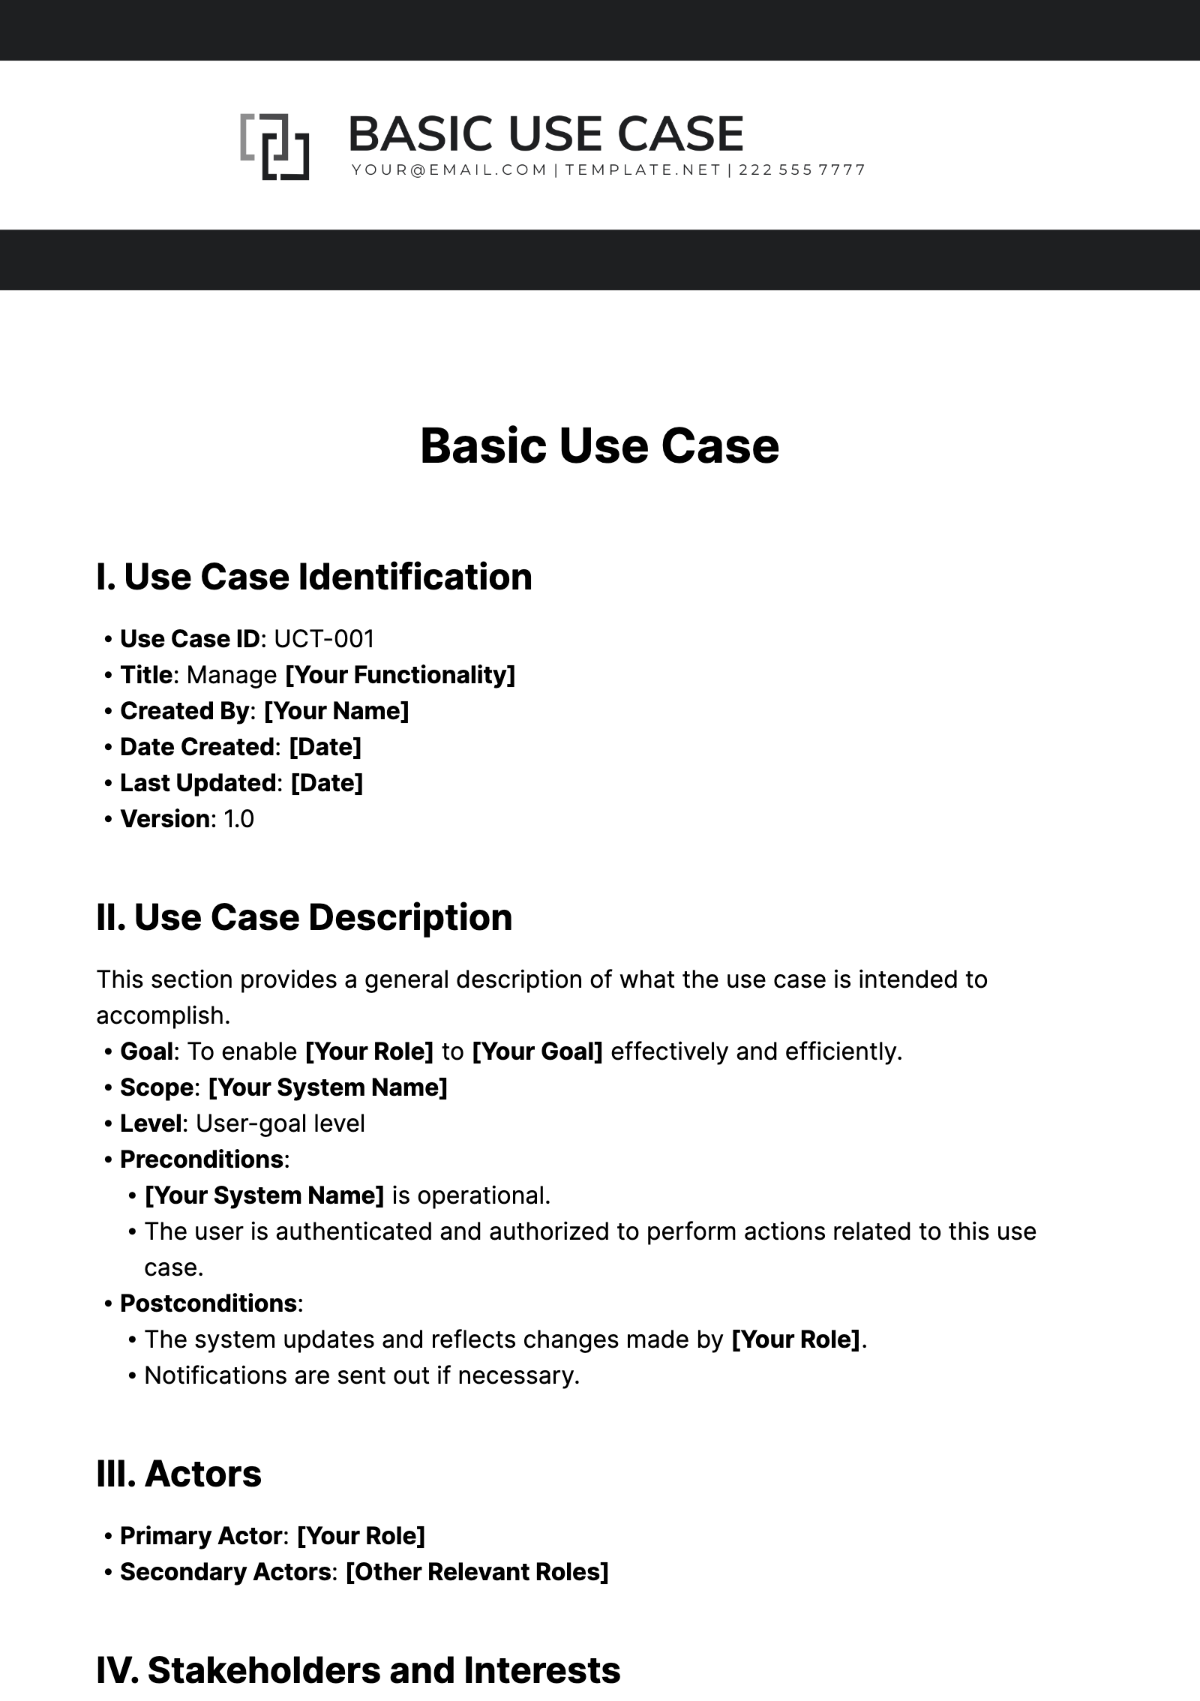 Basic Use Case Template